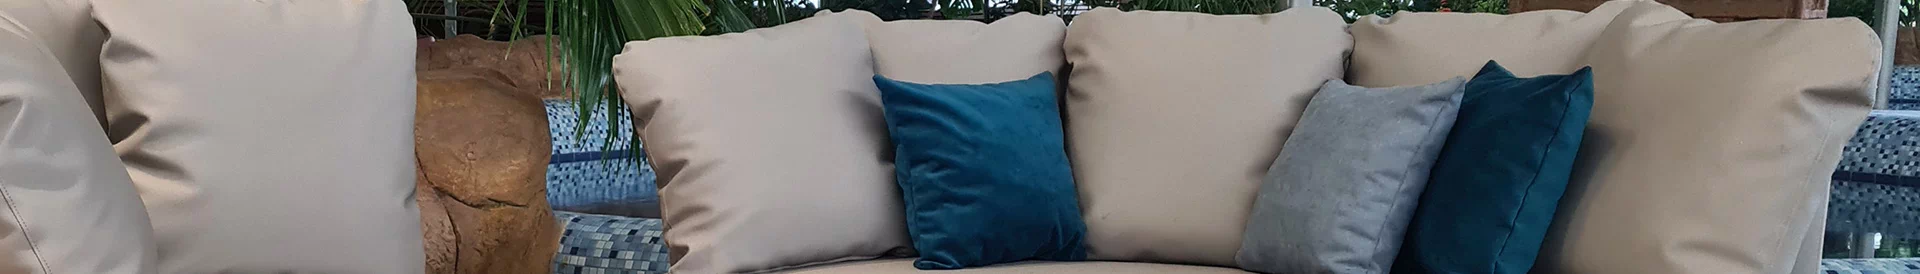 poduszki na kanapie